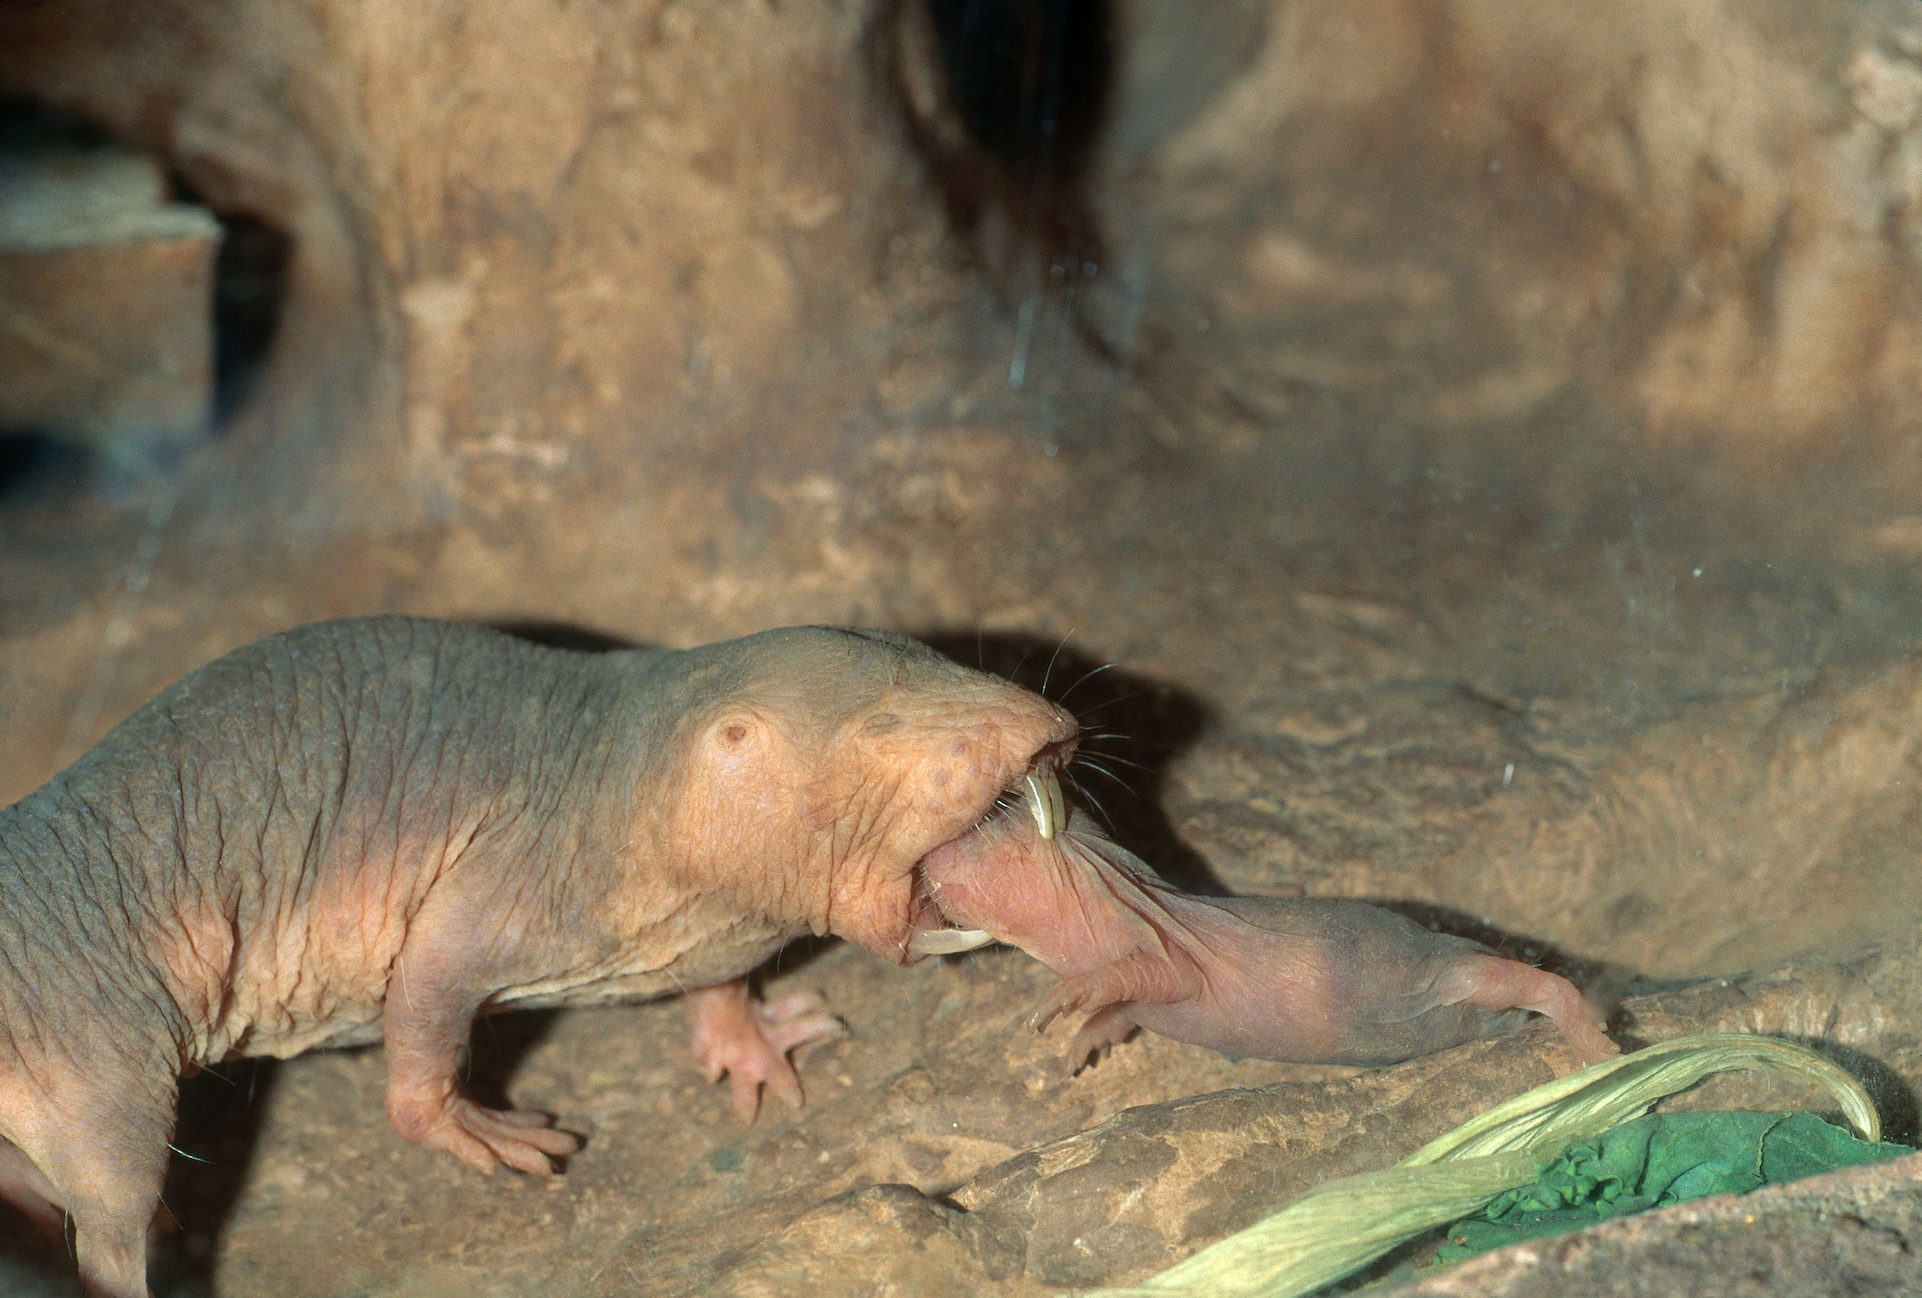 Naked mole rat's genetic code laid bare